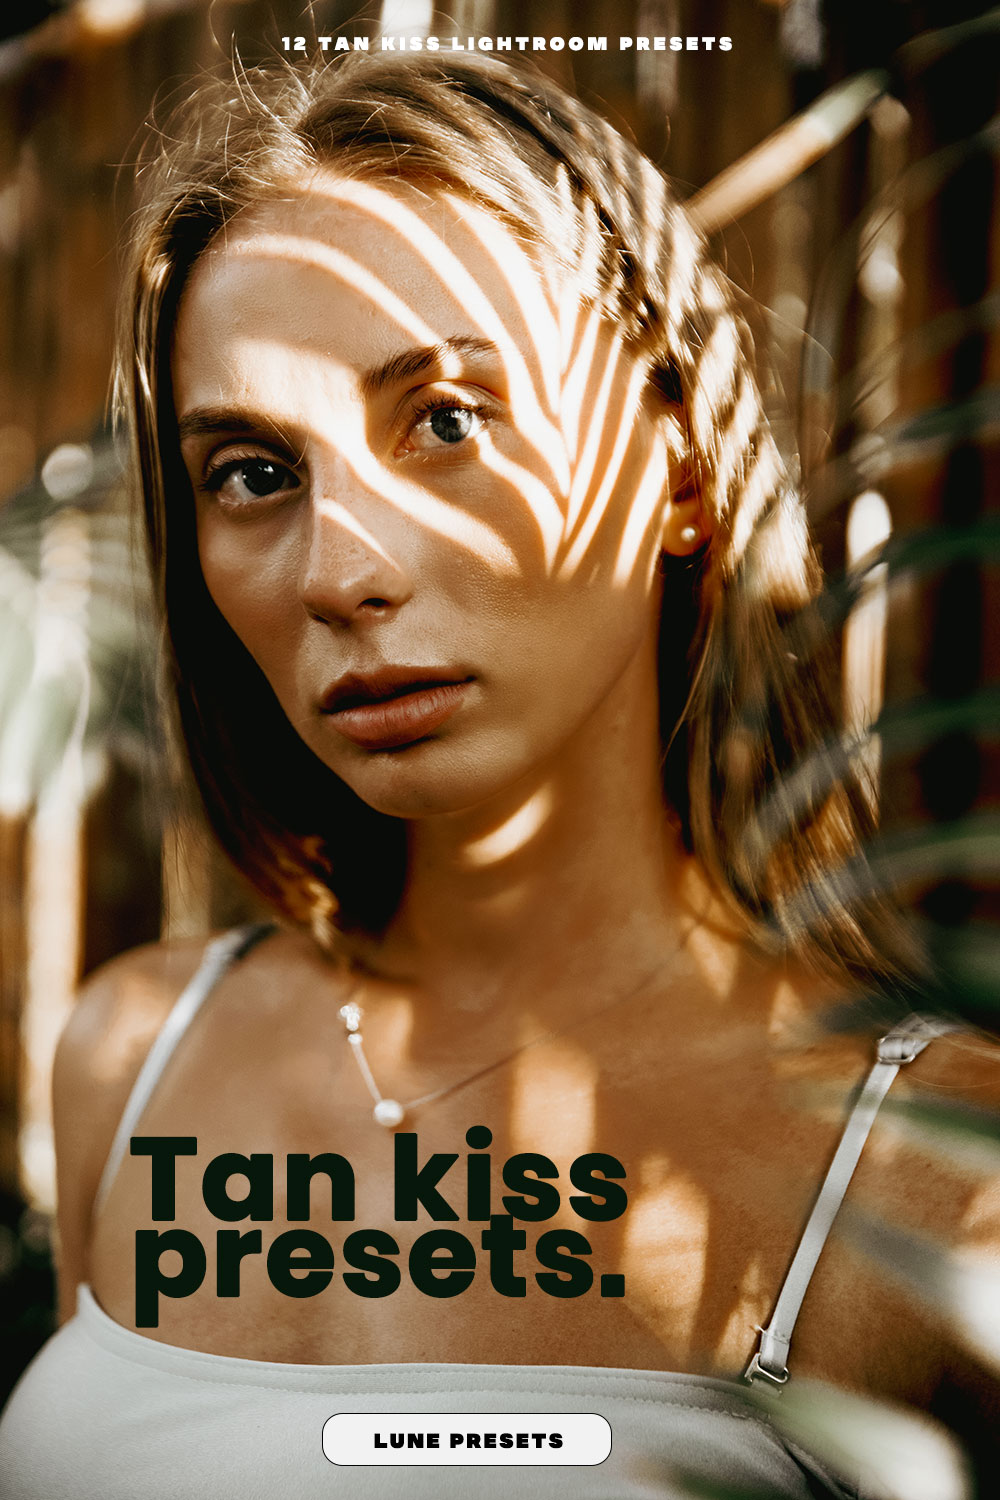 Tan kiss Lightroom Presets pinterest image.